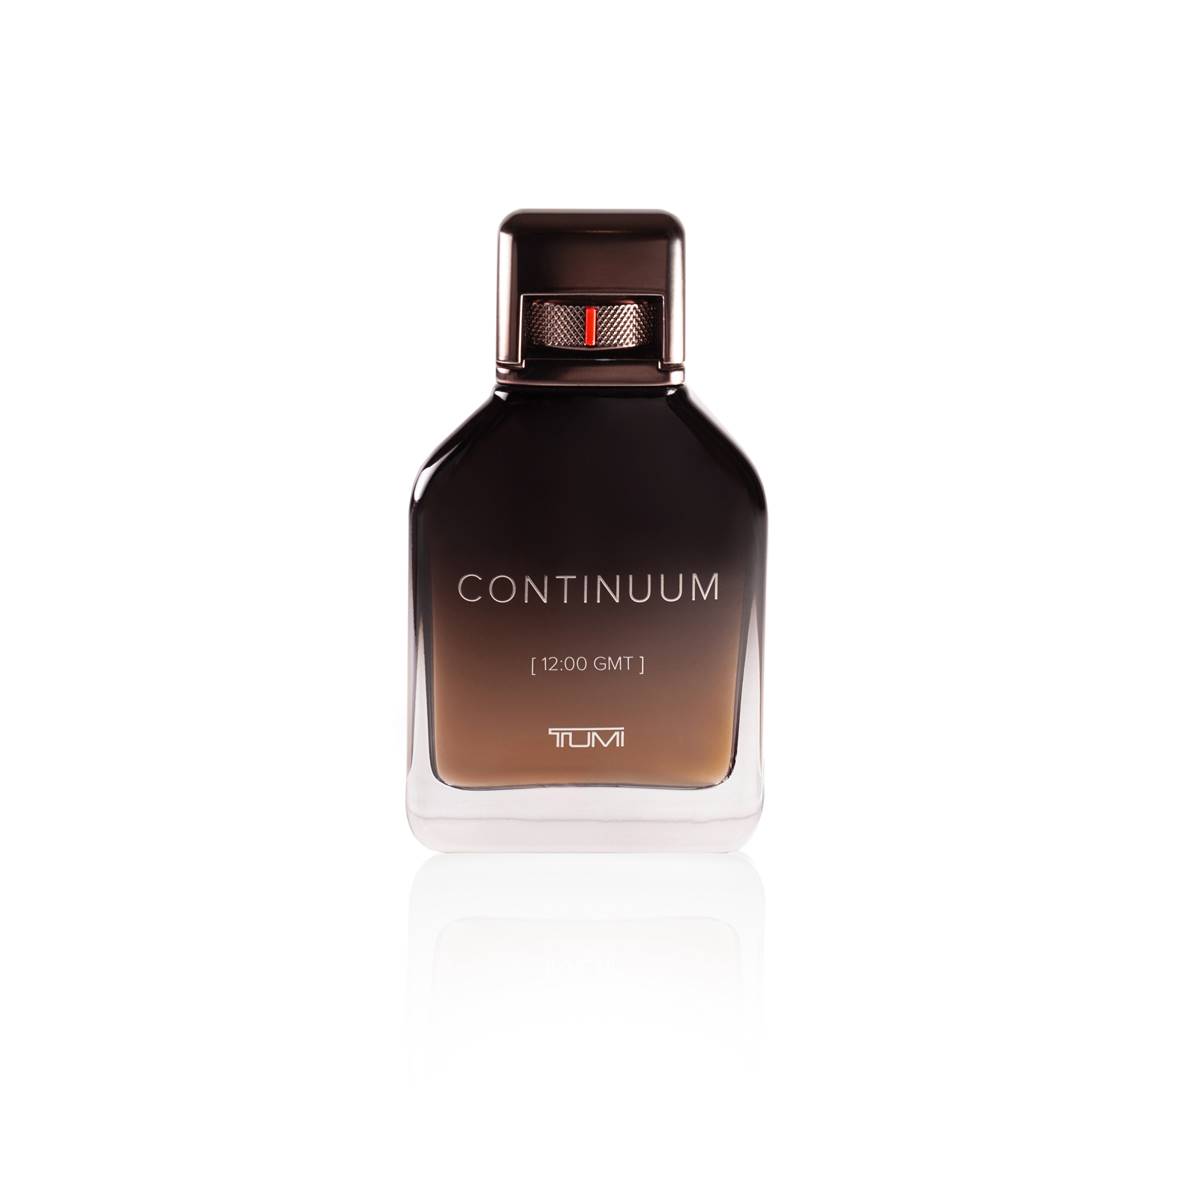 Open Video Modal for Continuum Ý12:00 GMT¨ TUMI Eau de Parfum Spray